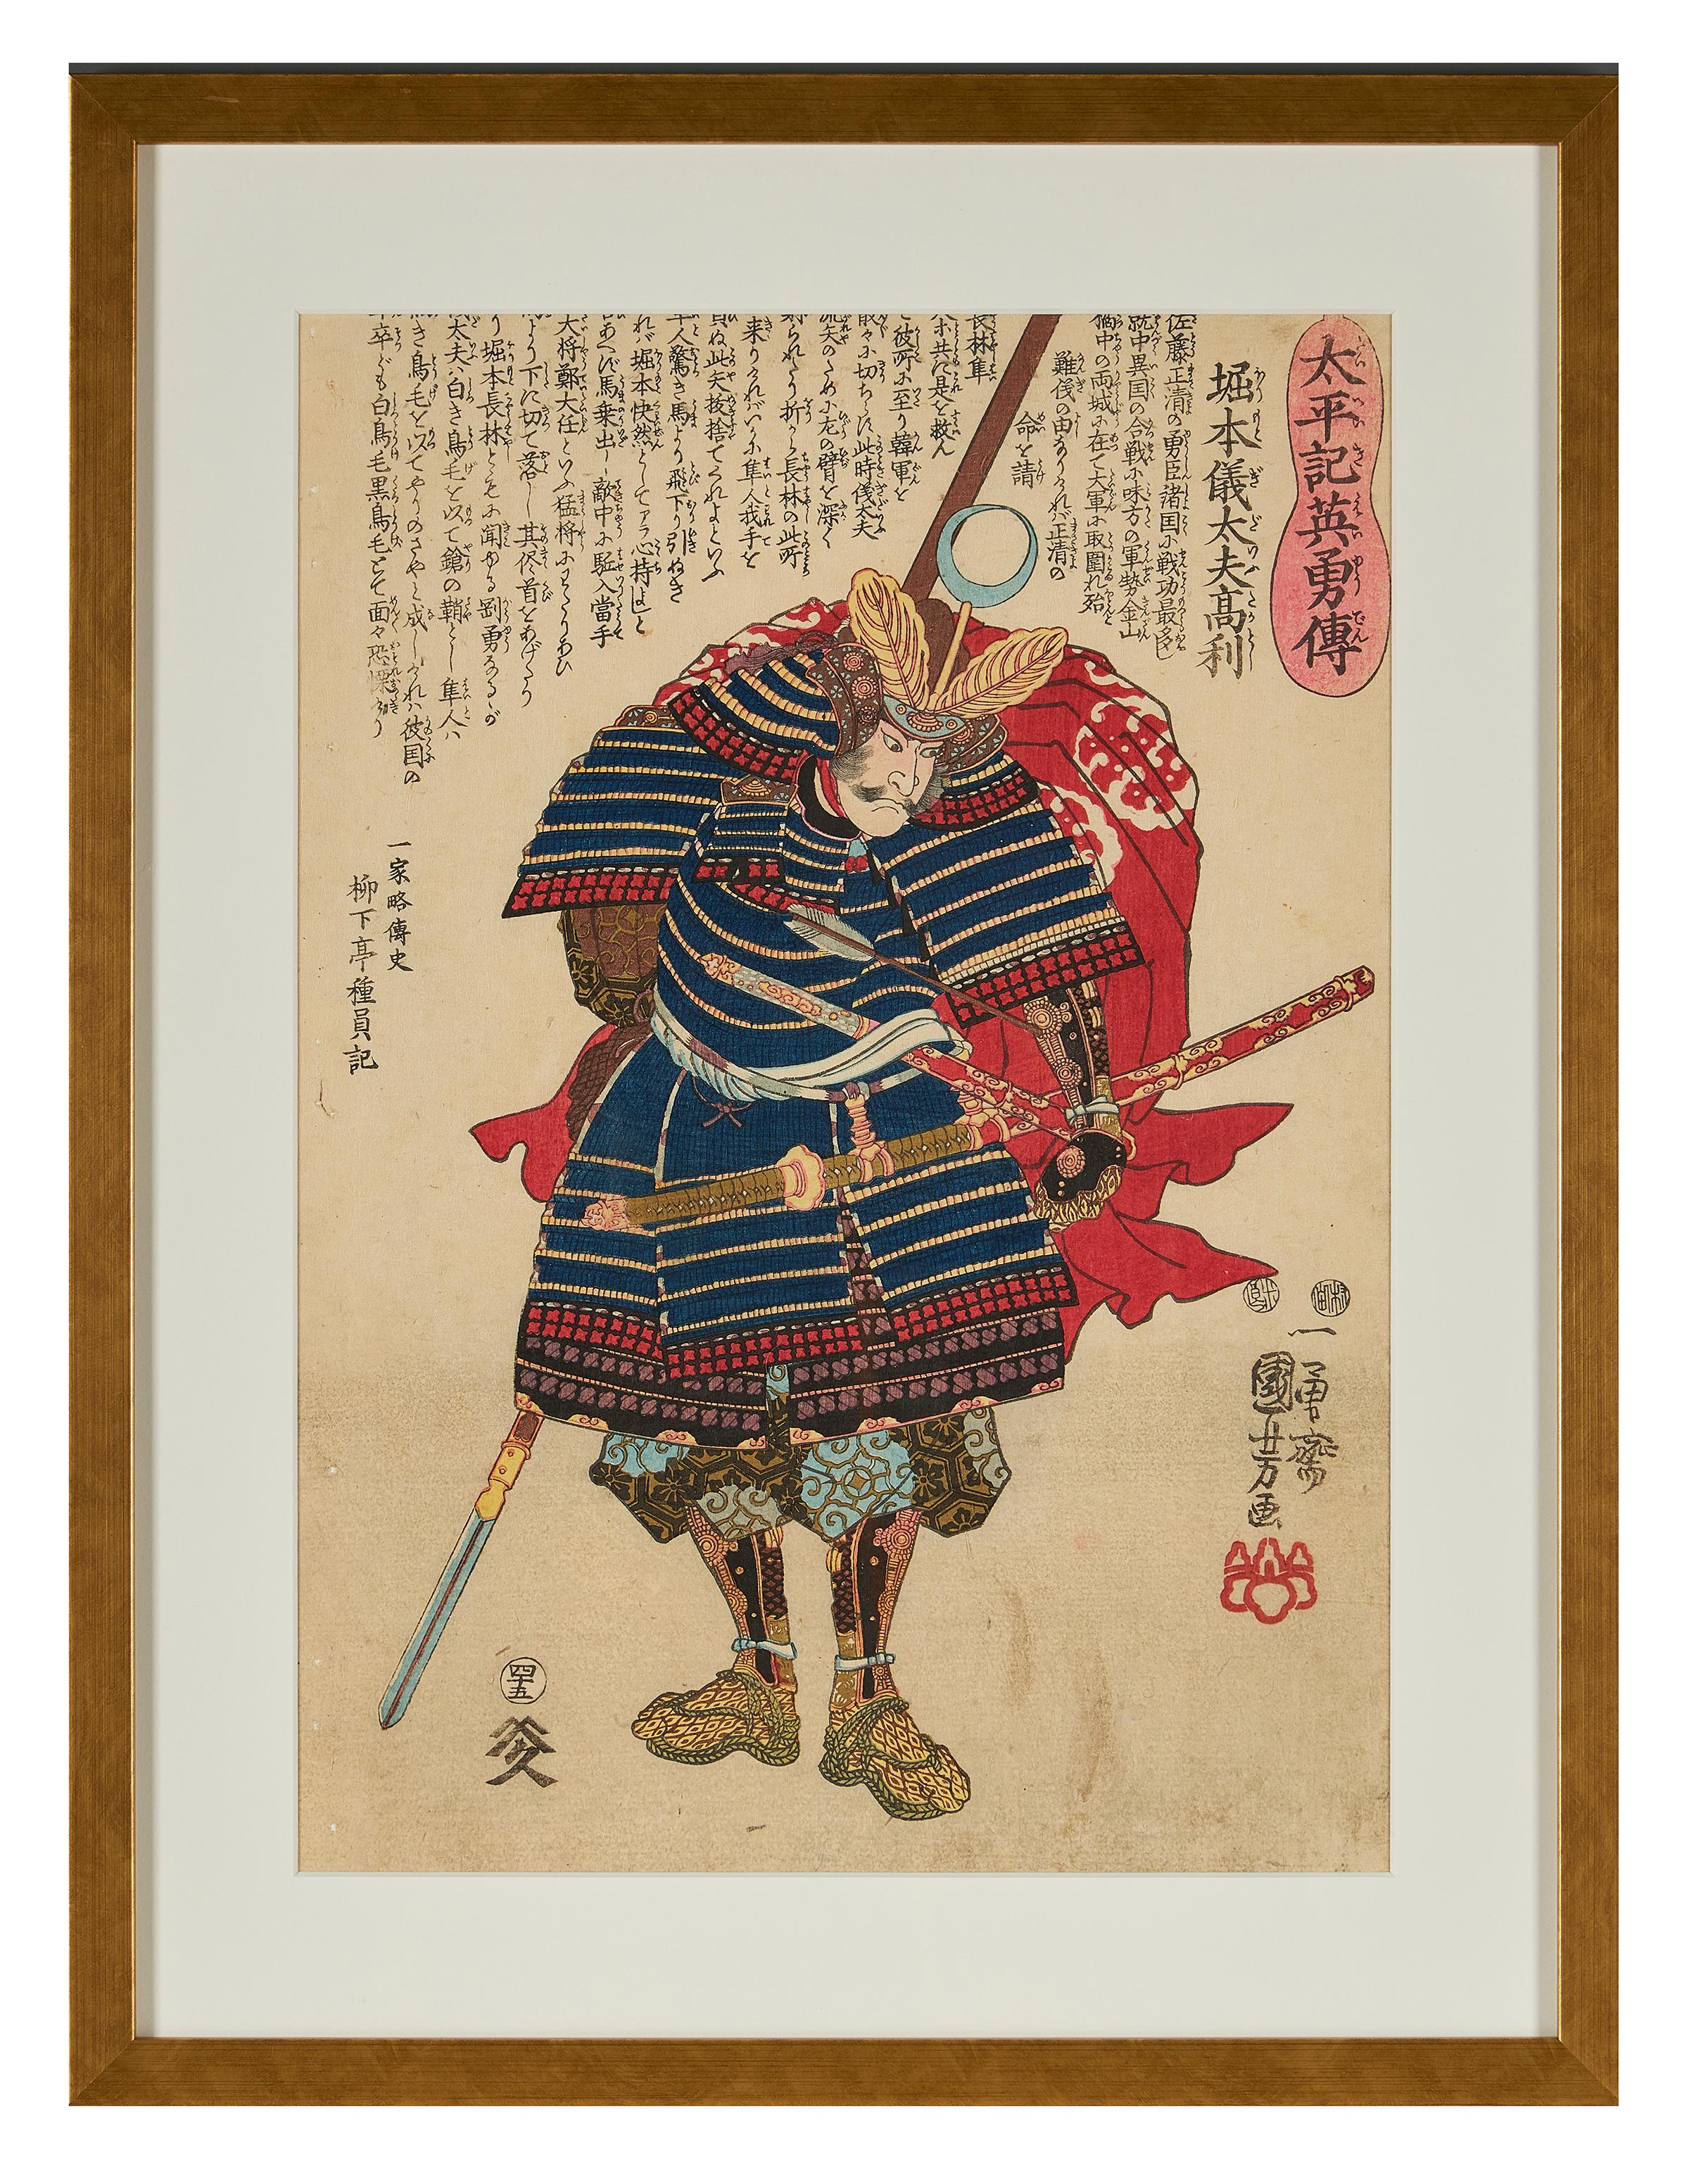 Neuf estampes sur bois japonaises d'Utagawa Kuniyoshi en vente 1